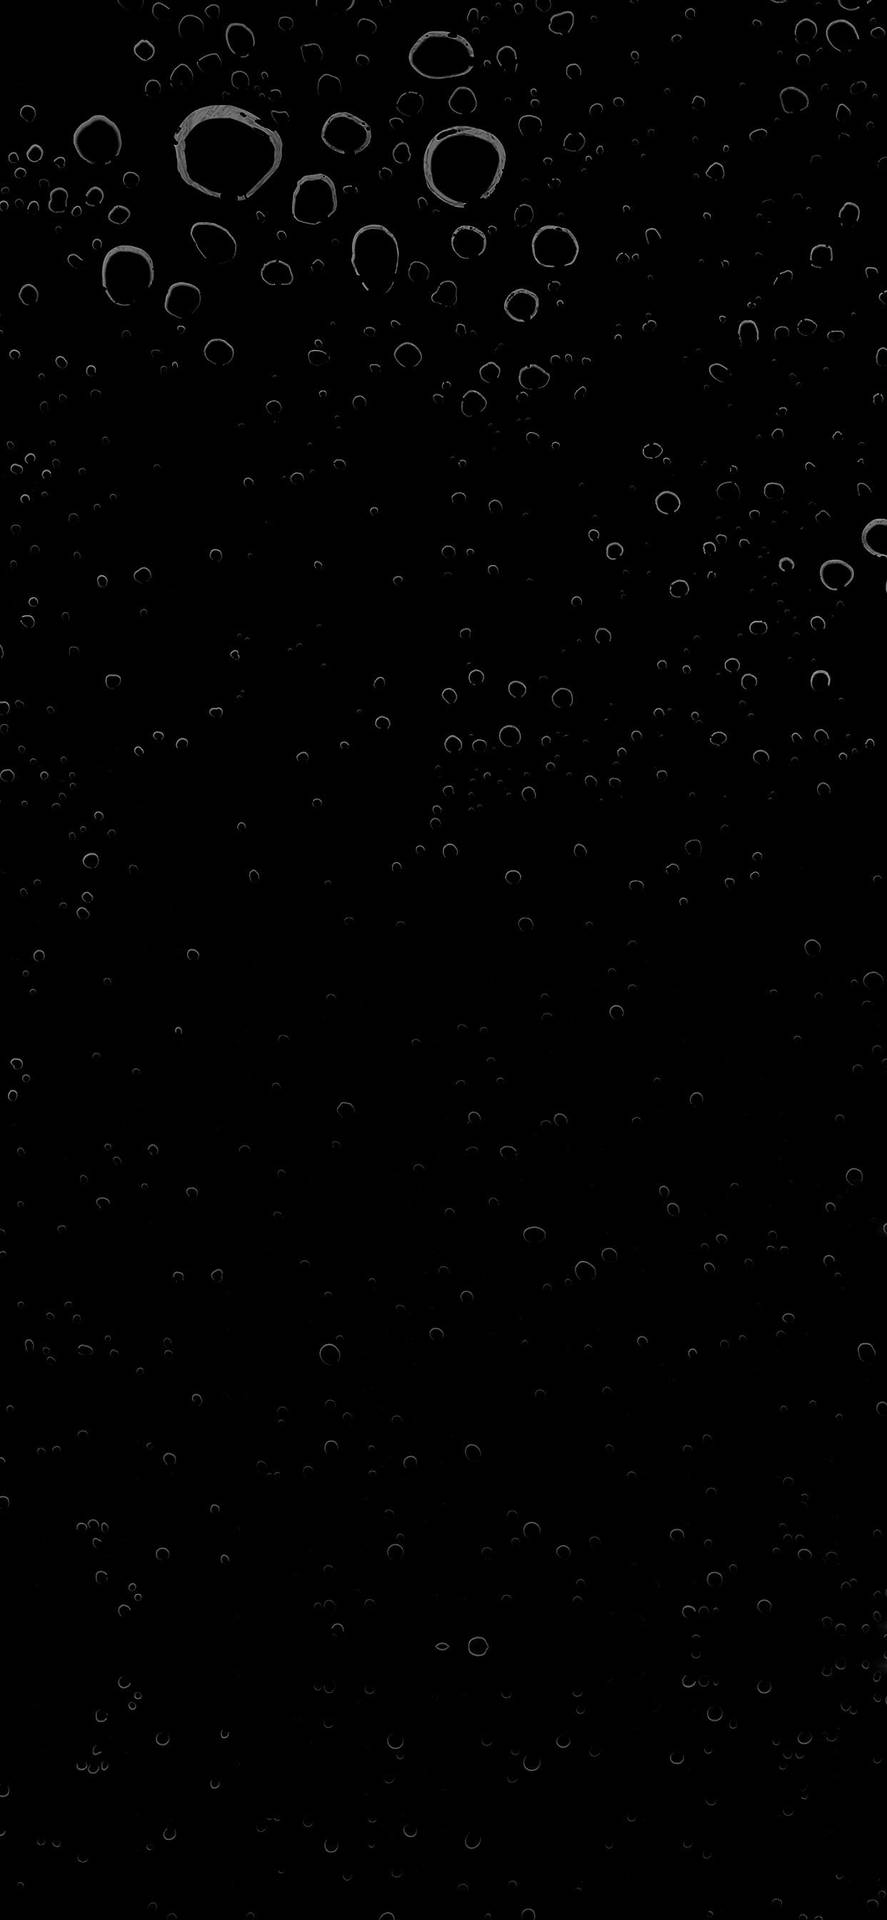 Dark Mode Air Bubbles Background